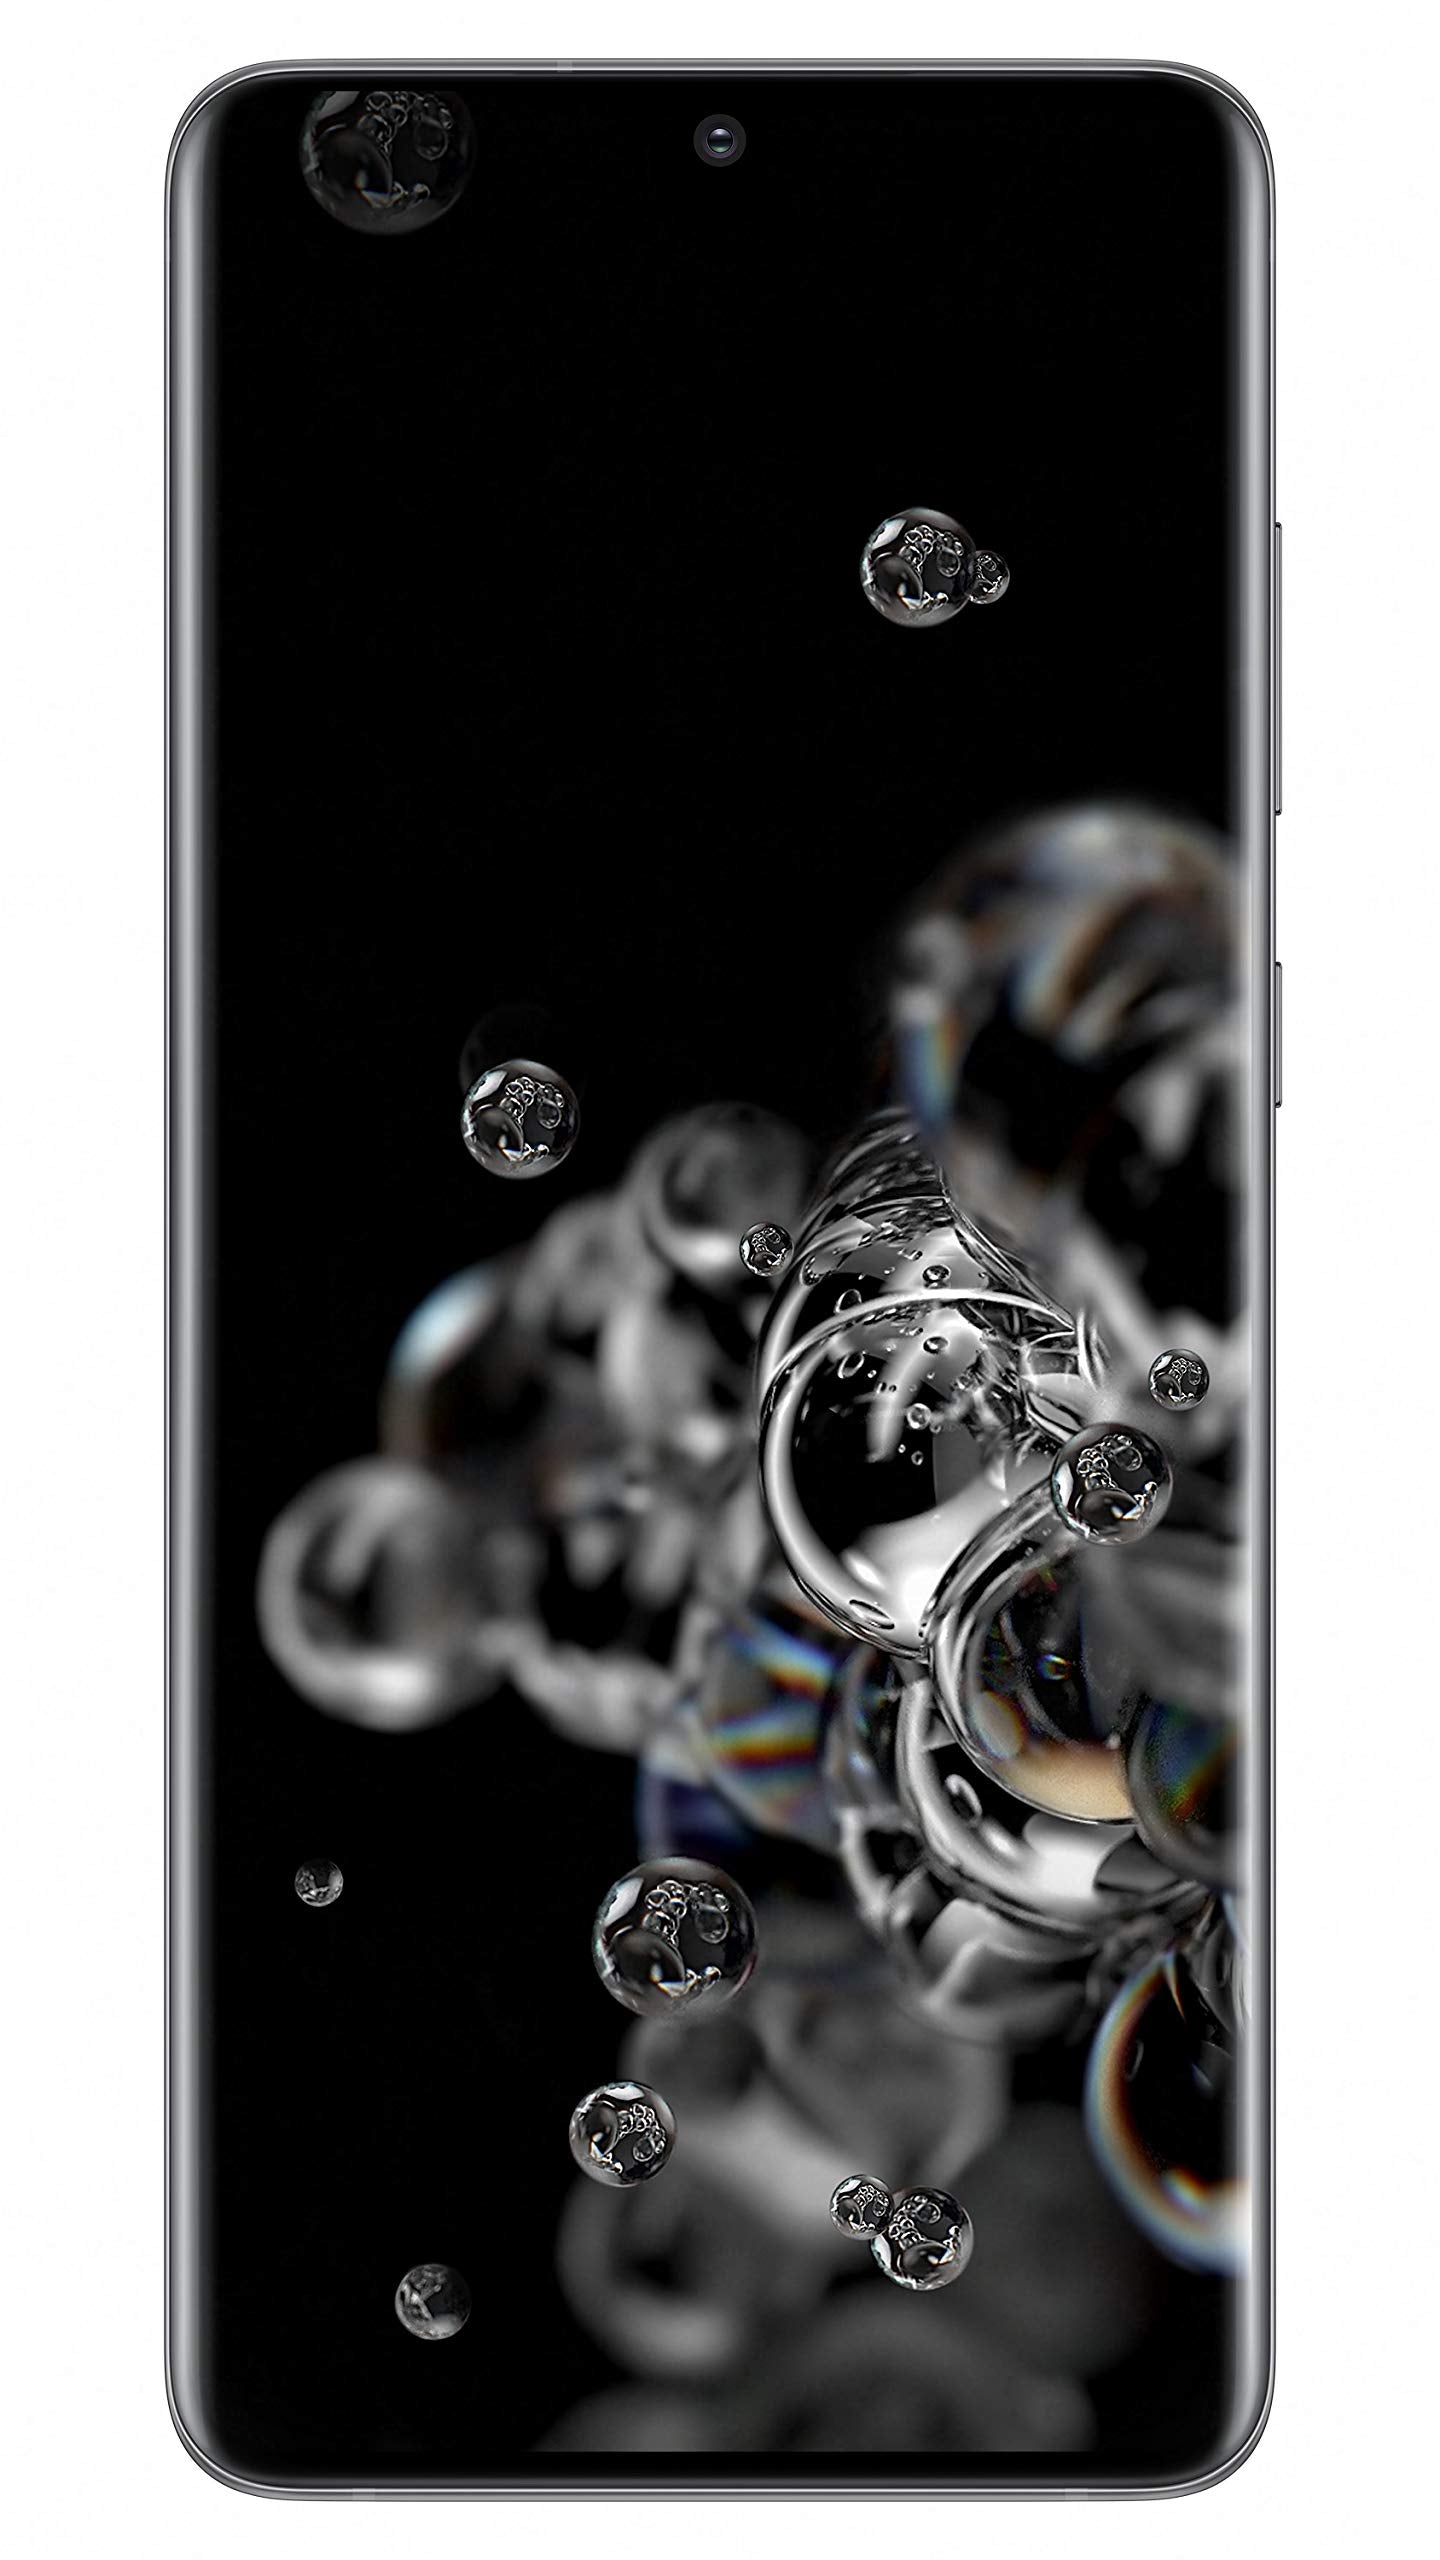 Samsung Galaxy S20 Ultra 5G- Cosmic Grey (Renewed)